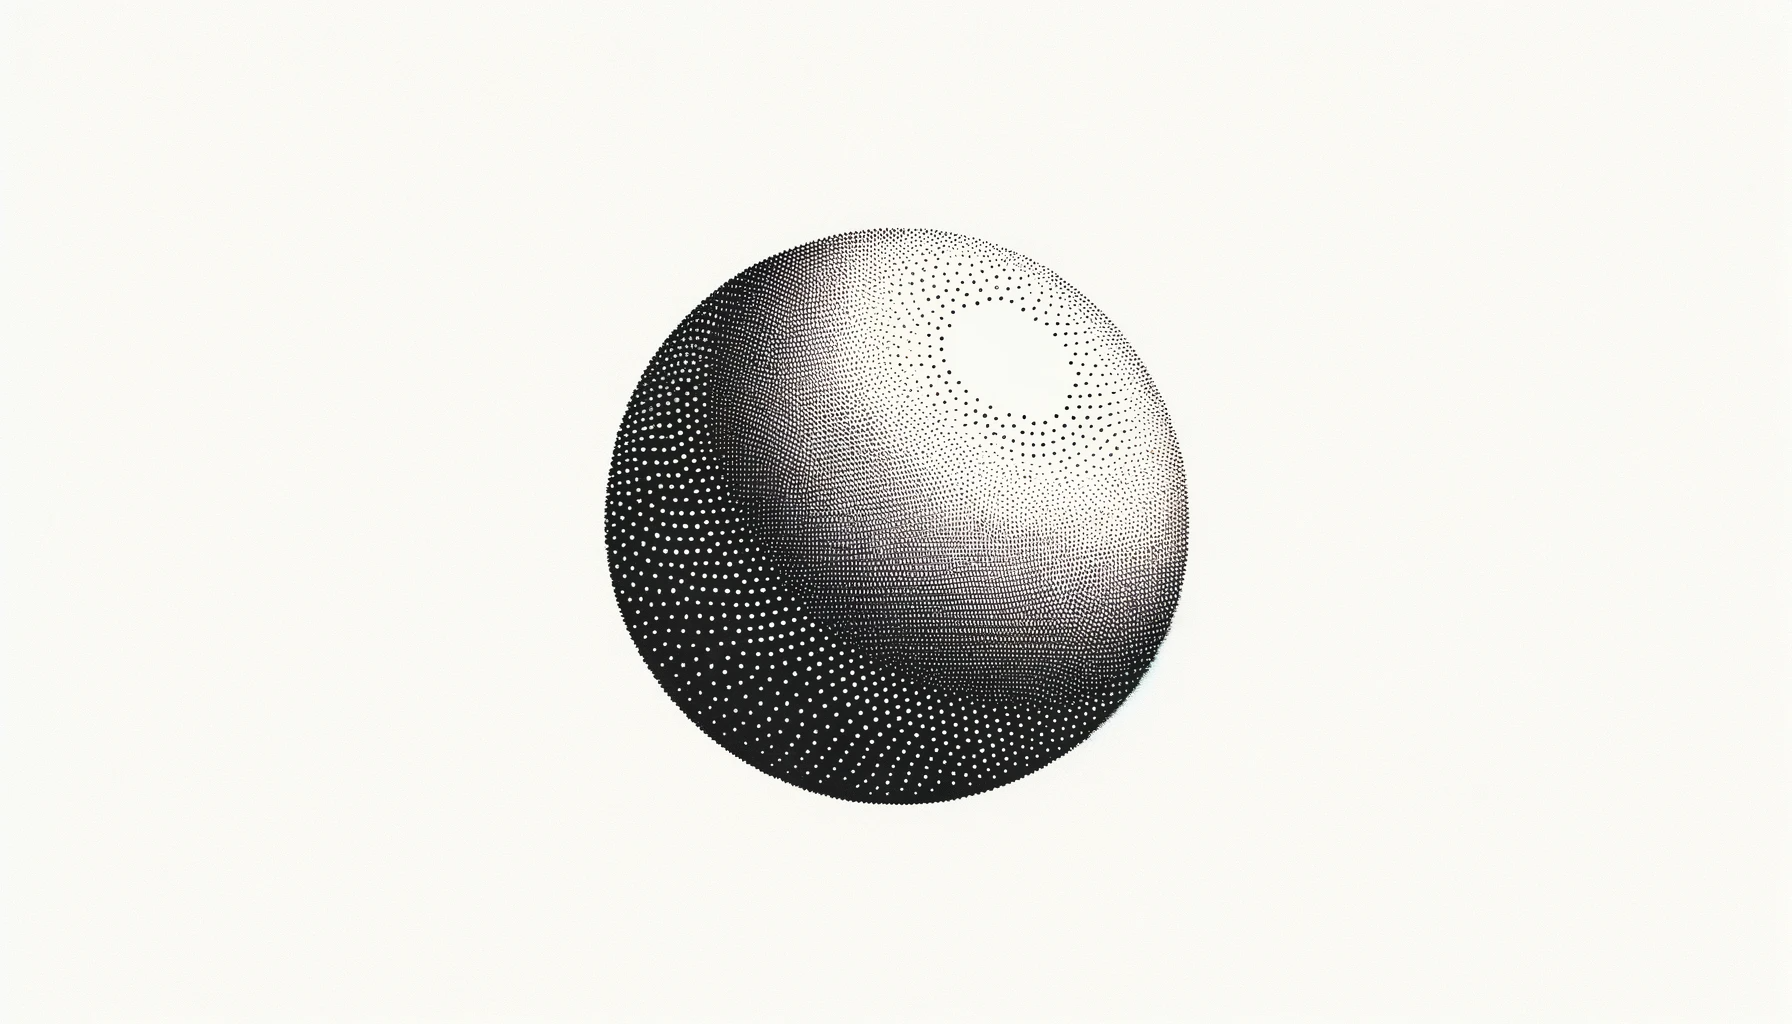 sphere representing the EU